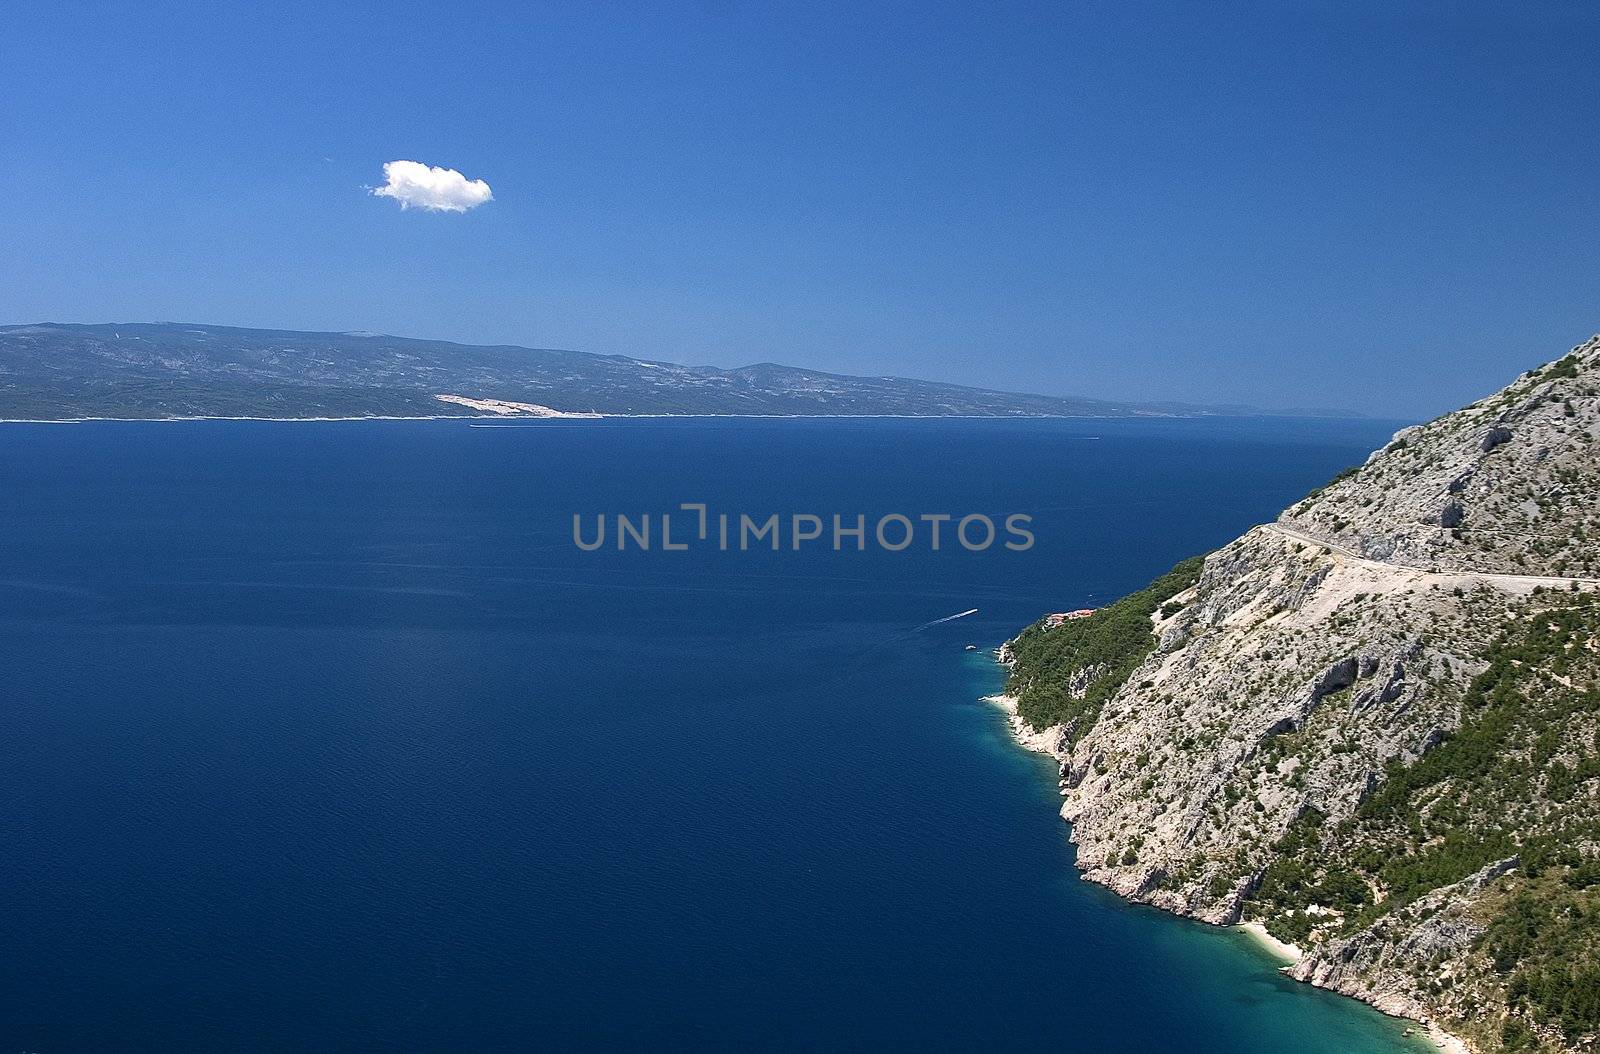 
the beauty of Croatia, 
die Sch�nheit von Kroatien
